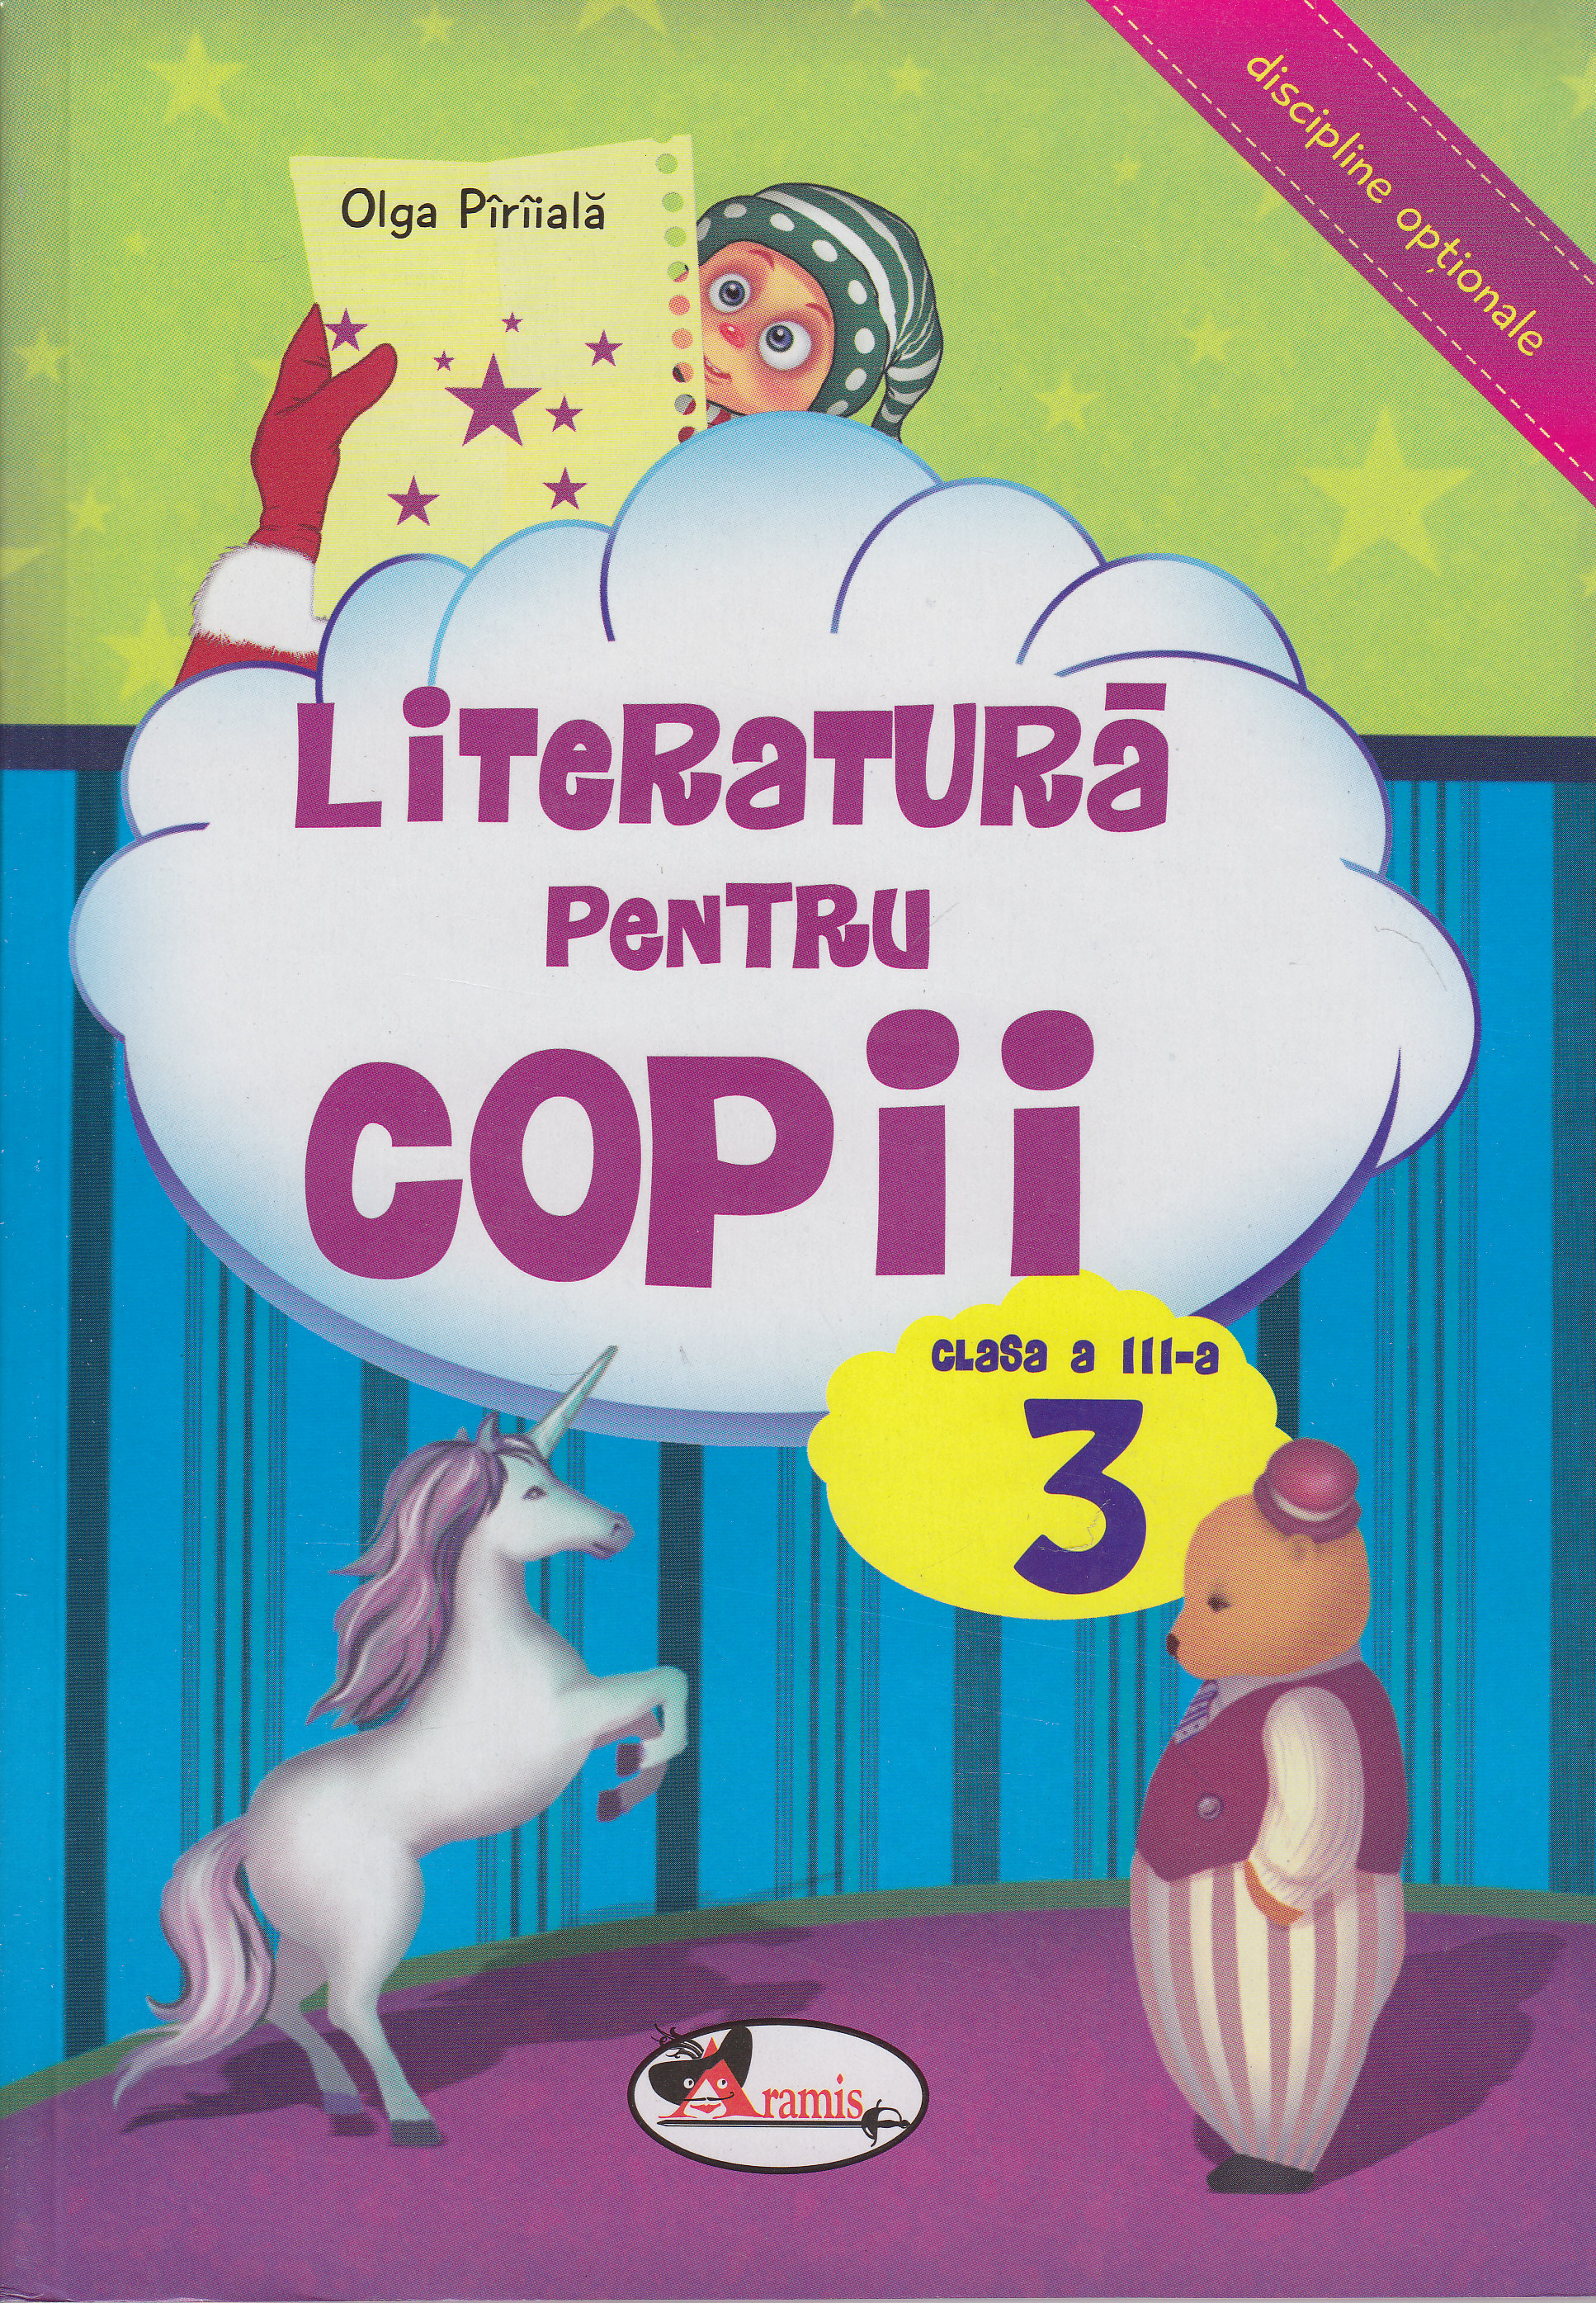 Literatura pentru copii cls 3 ed.2012 - Olga Oiriiala